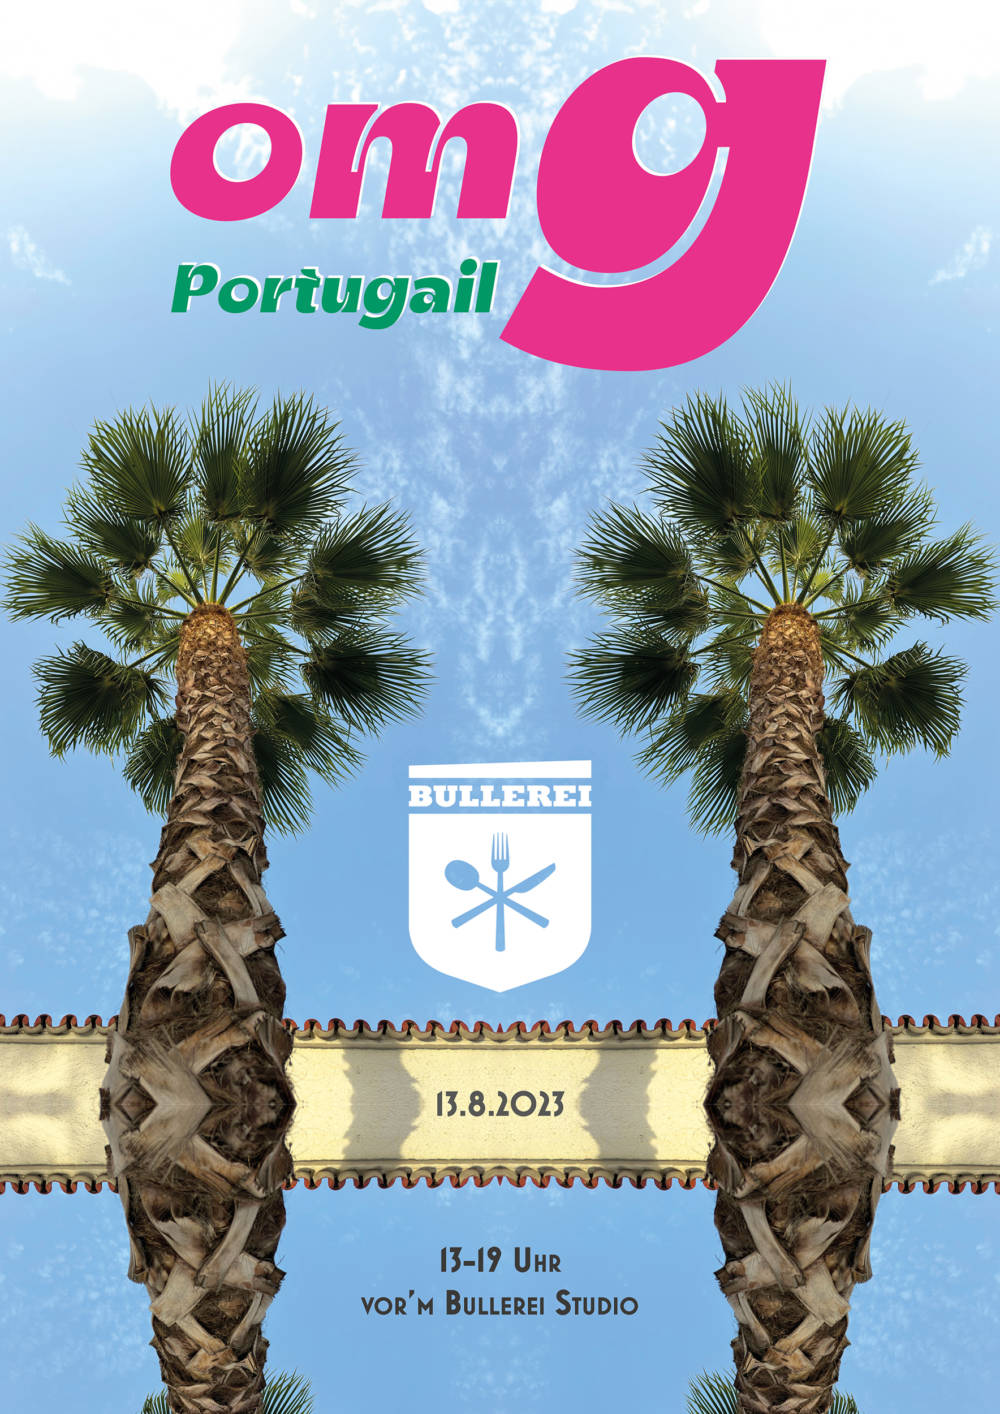 Portugal-Feeling: OMG Portugail findet von 13 bis 19 Uhr statt / ©Bullerei